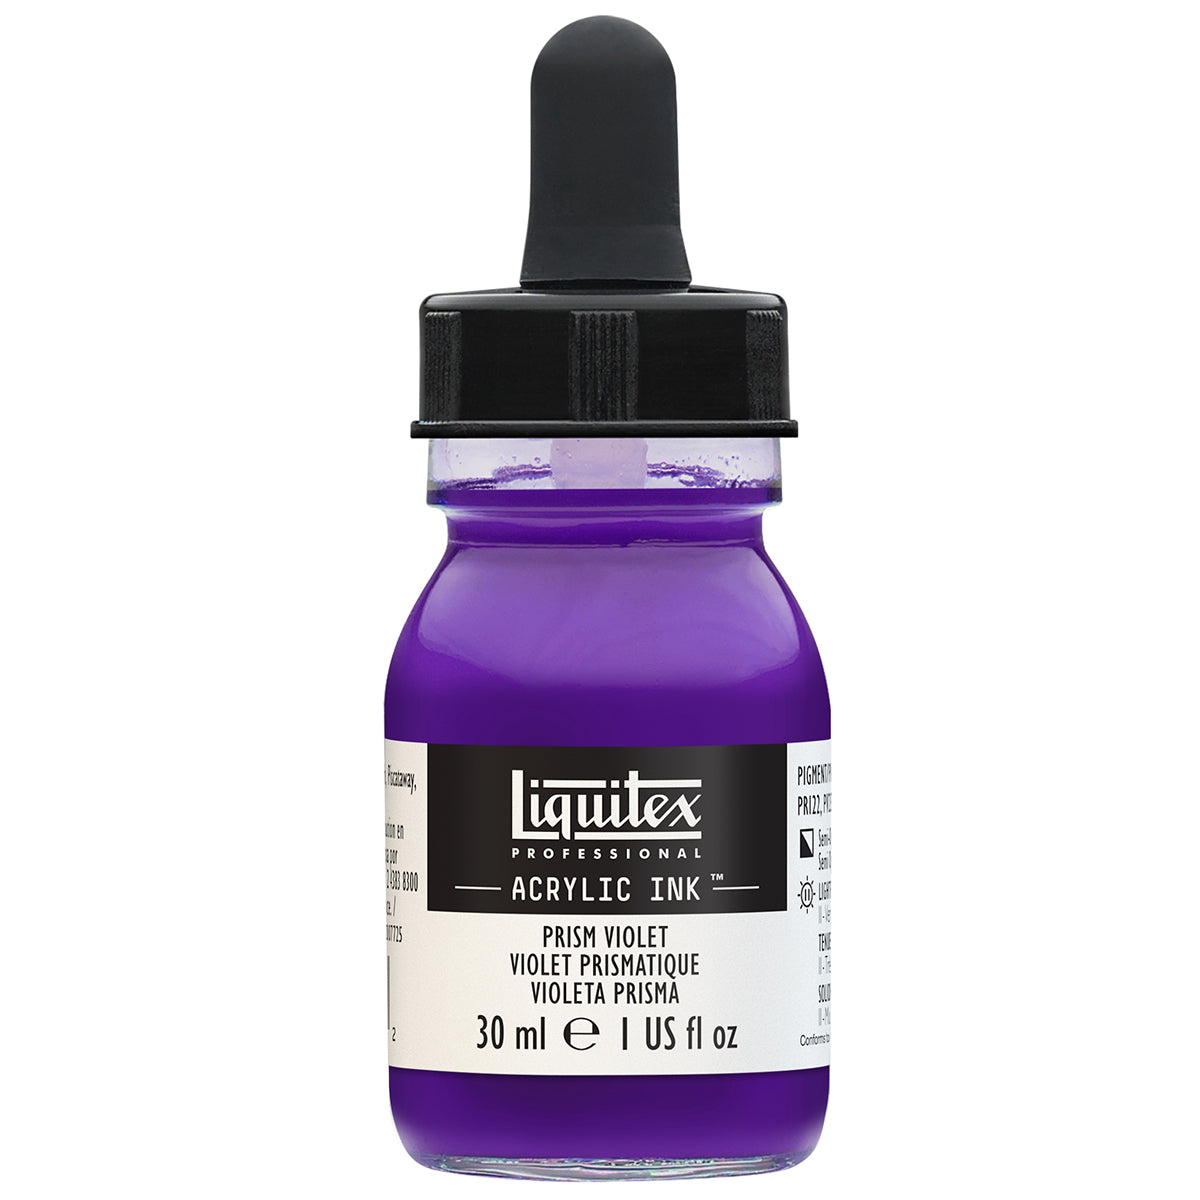 Liquitex - Acrylic Ink - 30ml Prism Violet